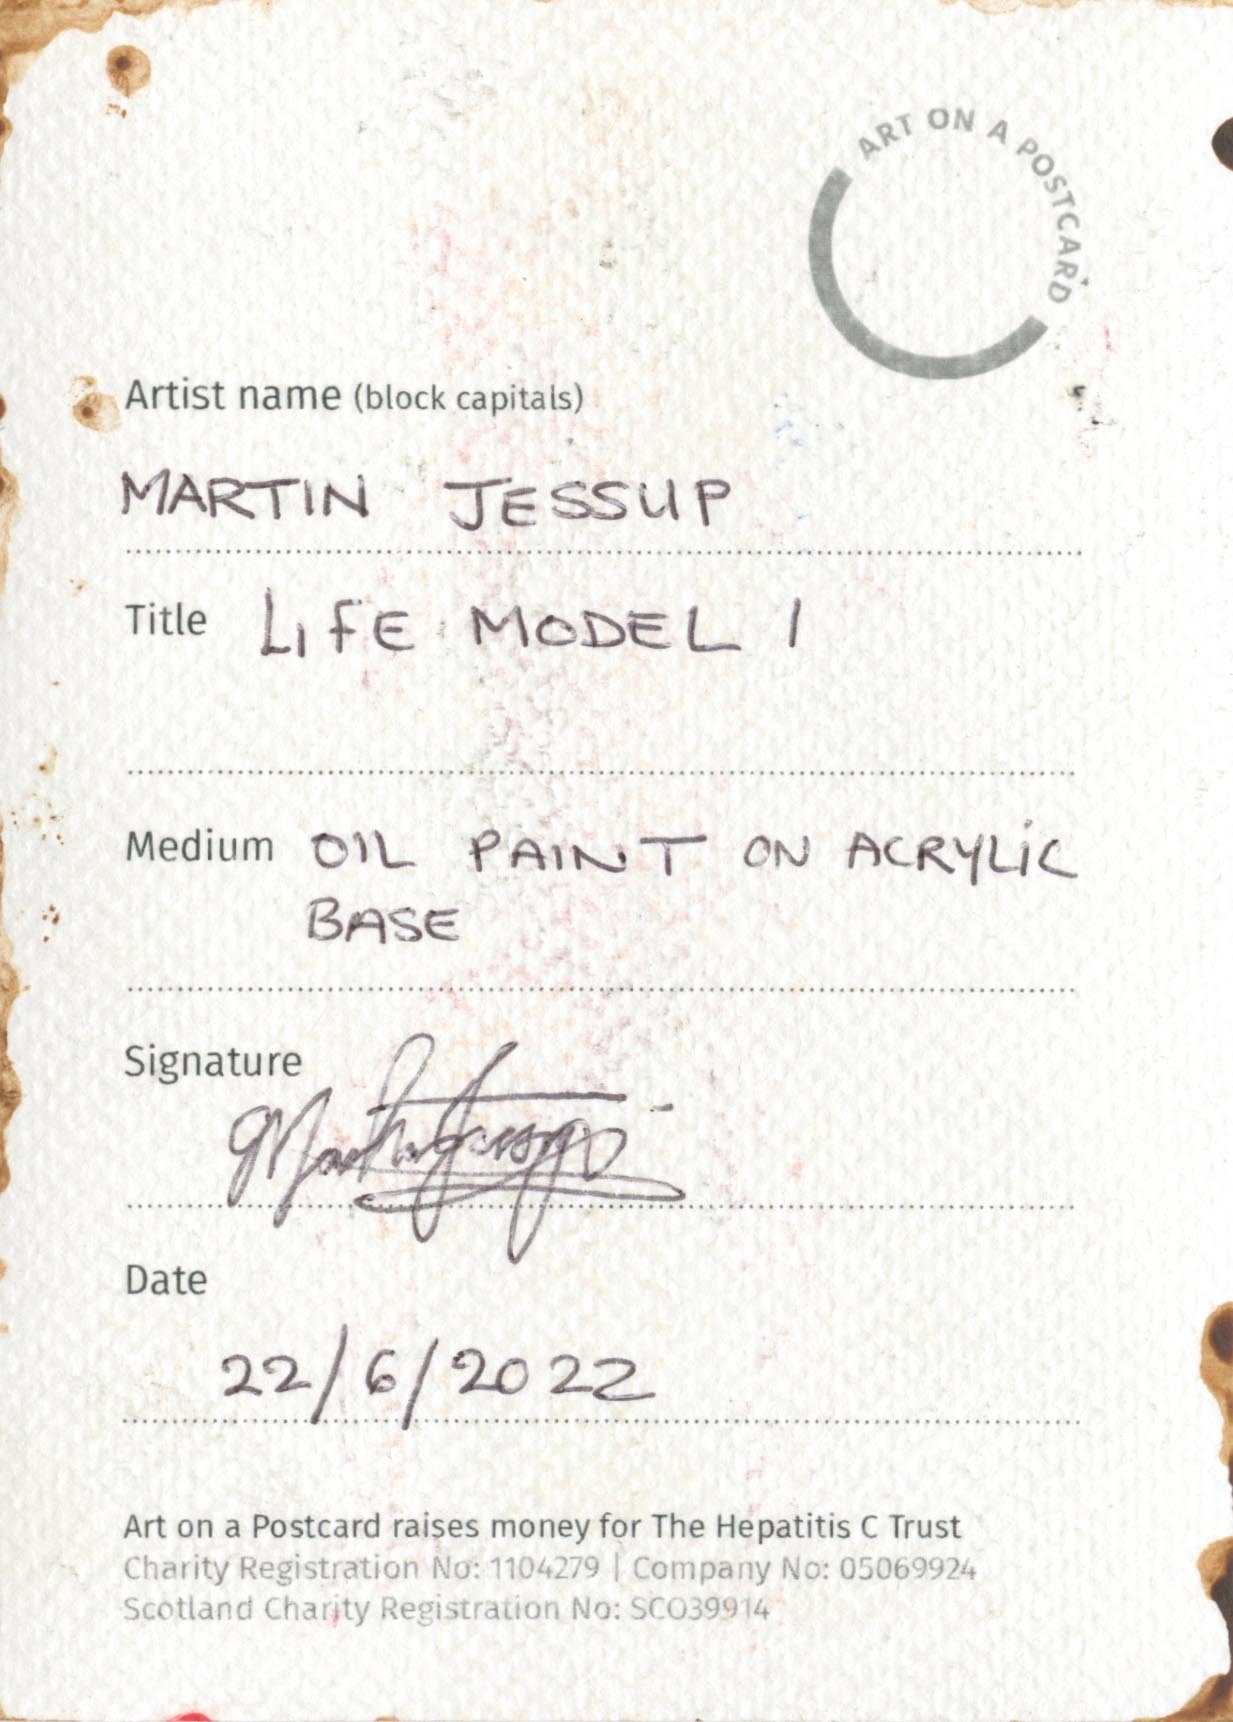 30. Martin Jessup - Life Model I - BACK